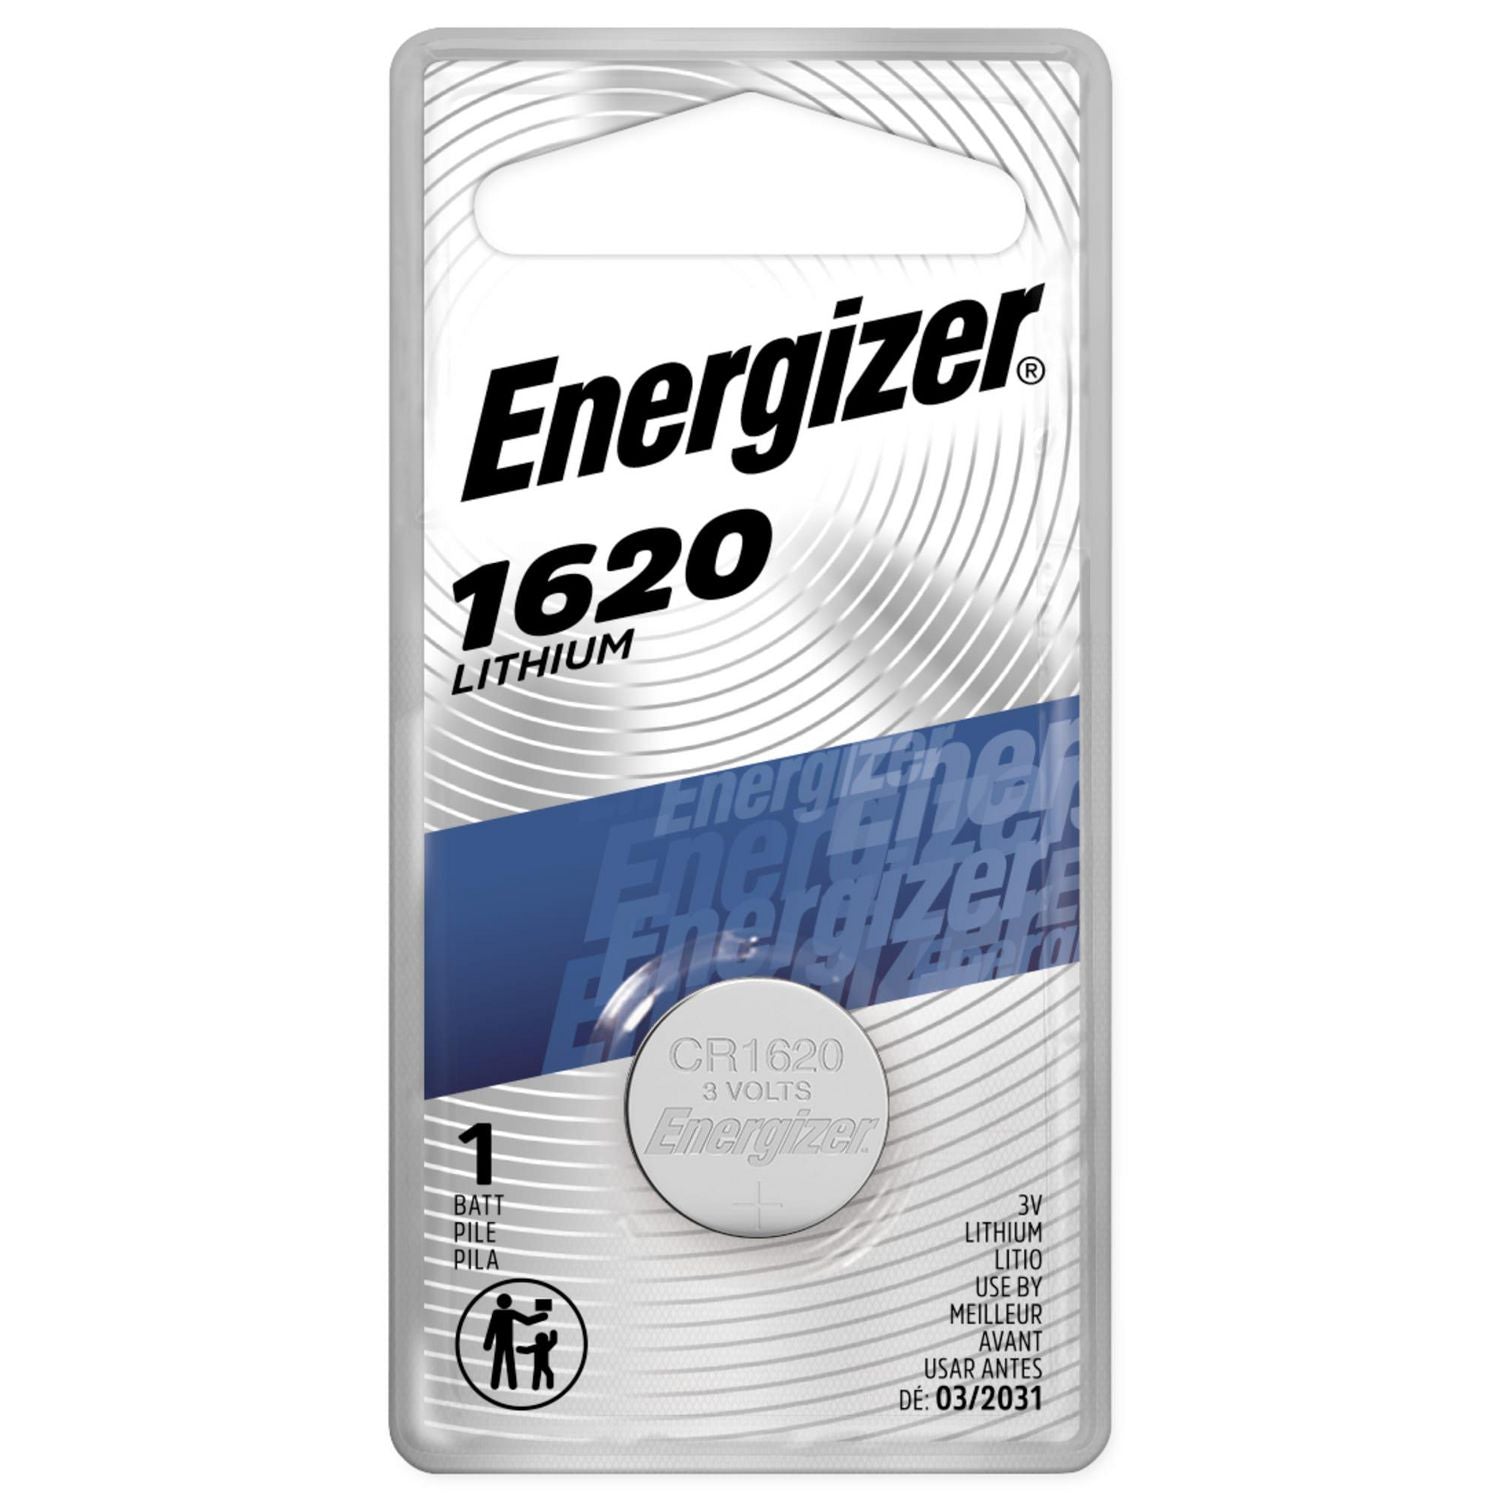 Energizer Lithium 1620 3V Battery